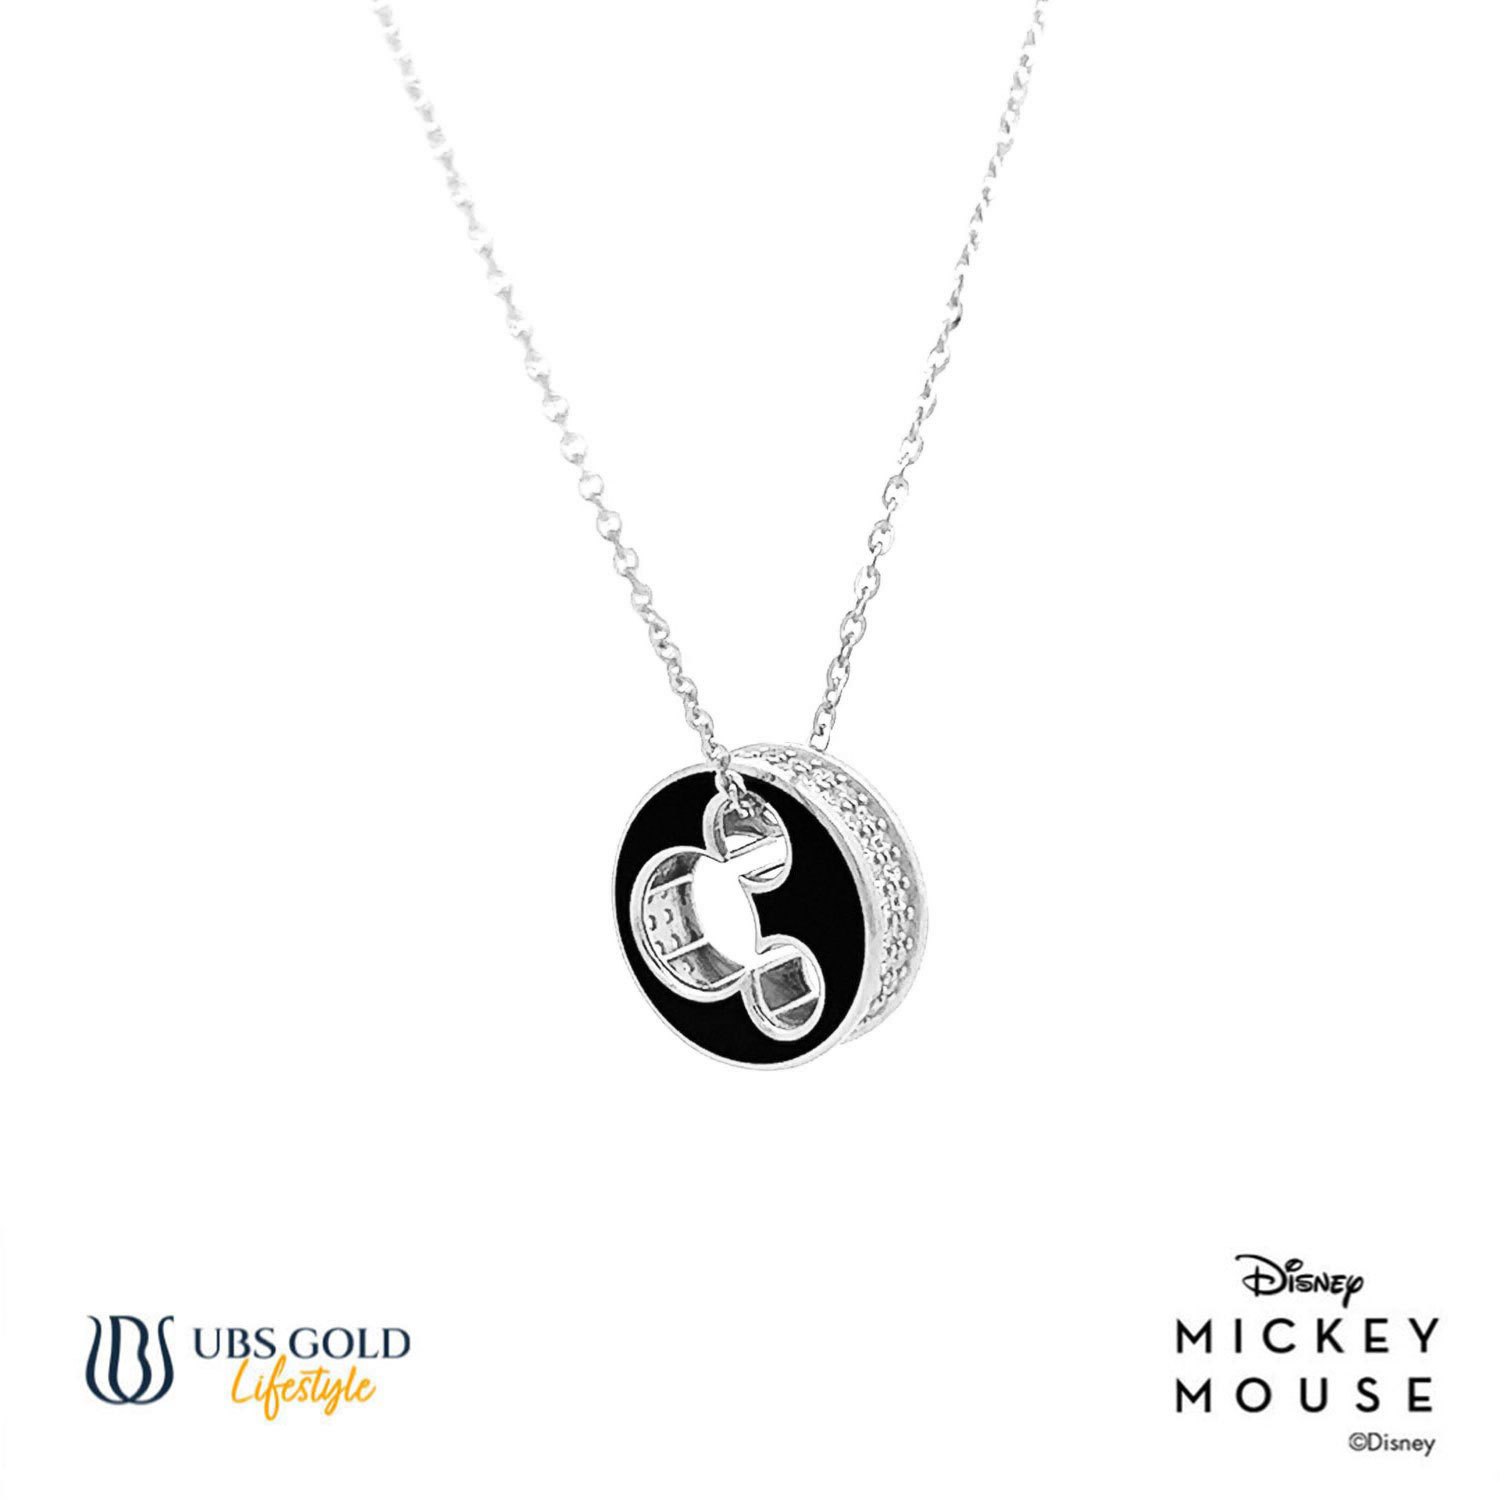 UBS Gold Kalung Emas Disney Mickey Mouse - Kky0454 - 17K